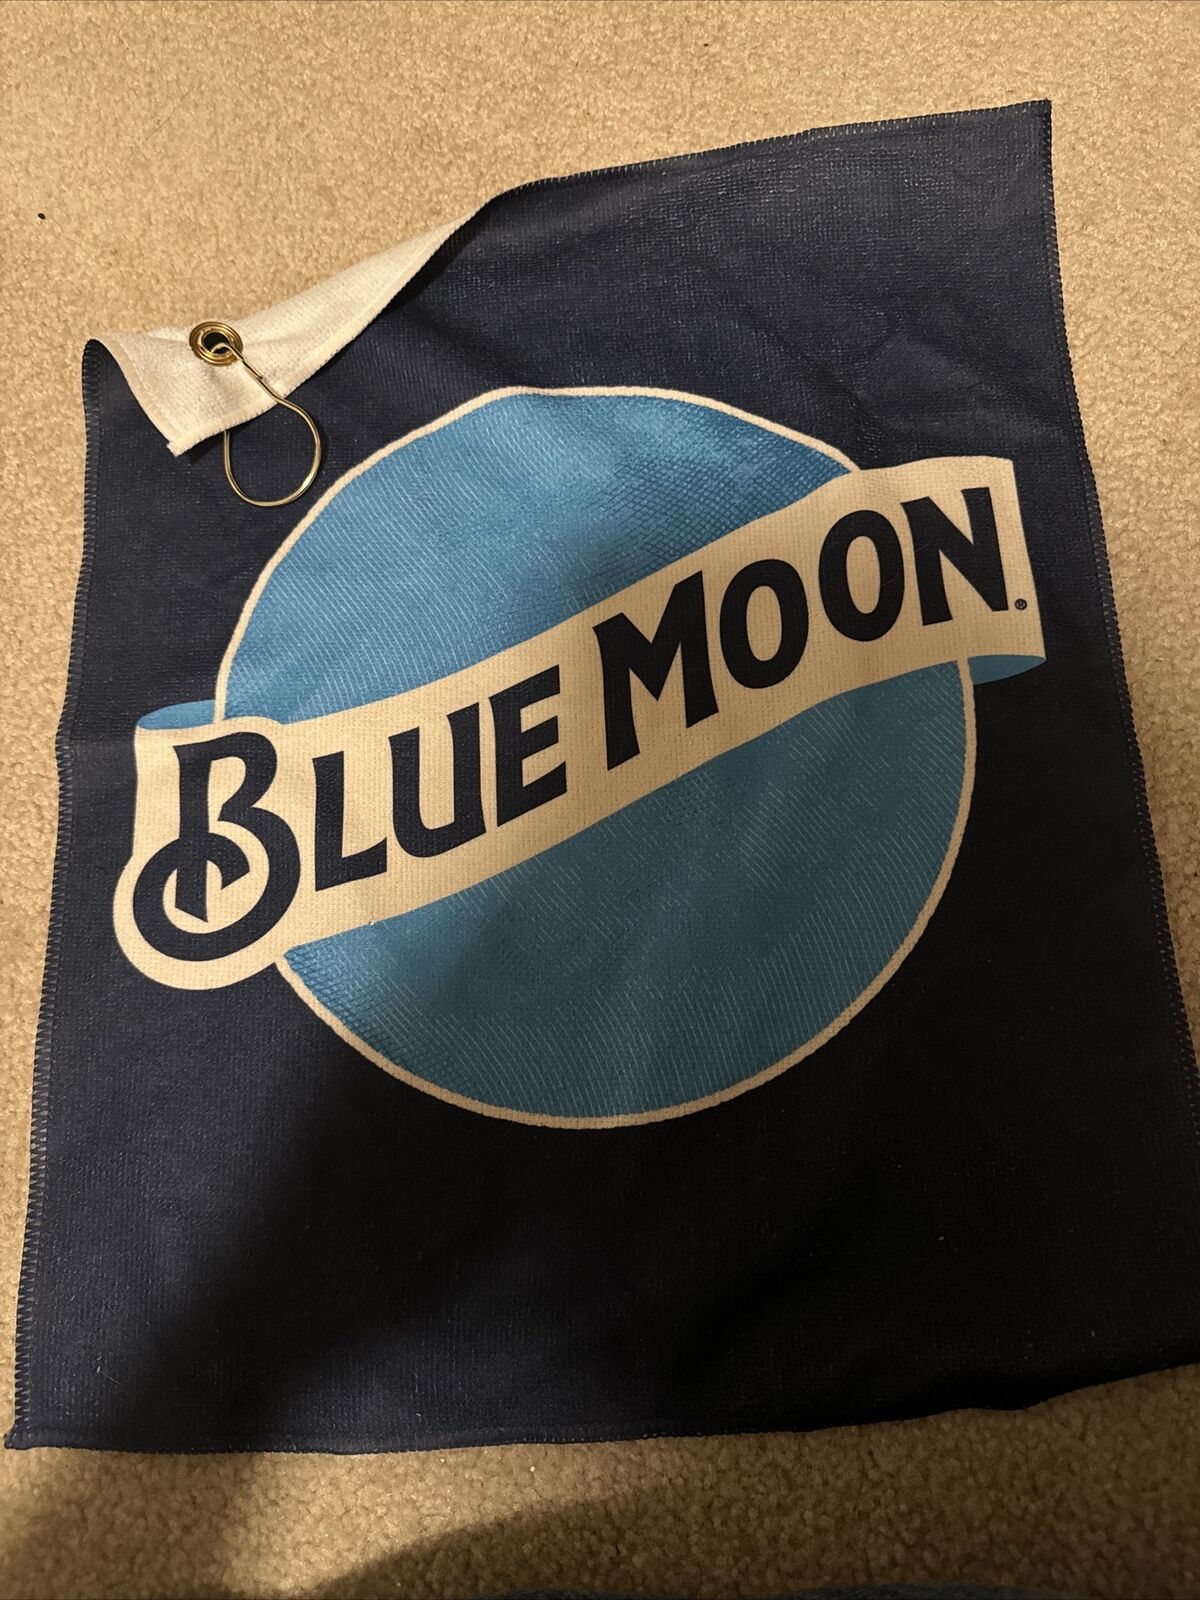 Blue Moon Beer Golf Towel Blue Rag Sports Golf Ball Cleaner Club